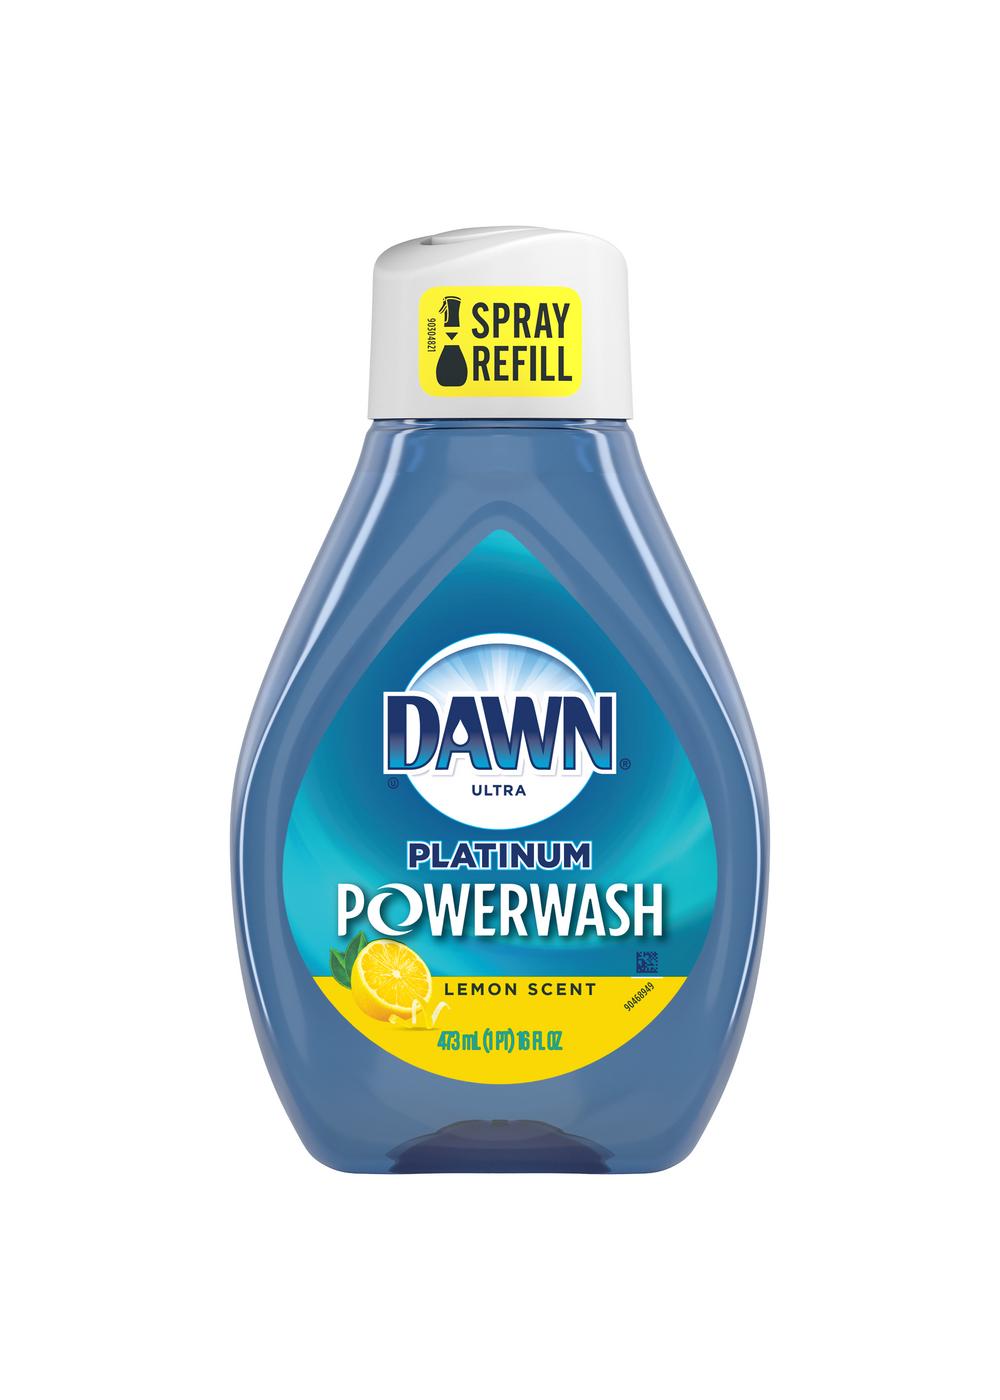 Reviews for Dawn Platinum Powerwash Dish Spray 16 oz. Fresh Scent Bundle  Dishwashing Liquid with 1 Starter Kit Plus 1 Refill